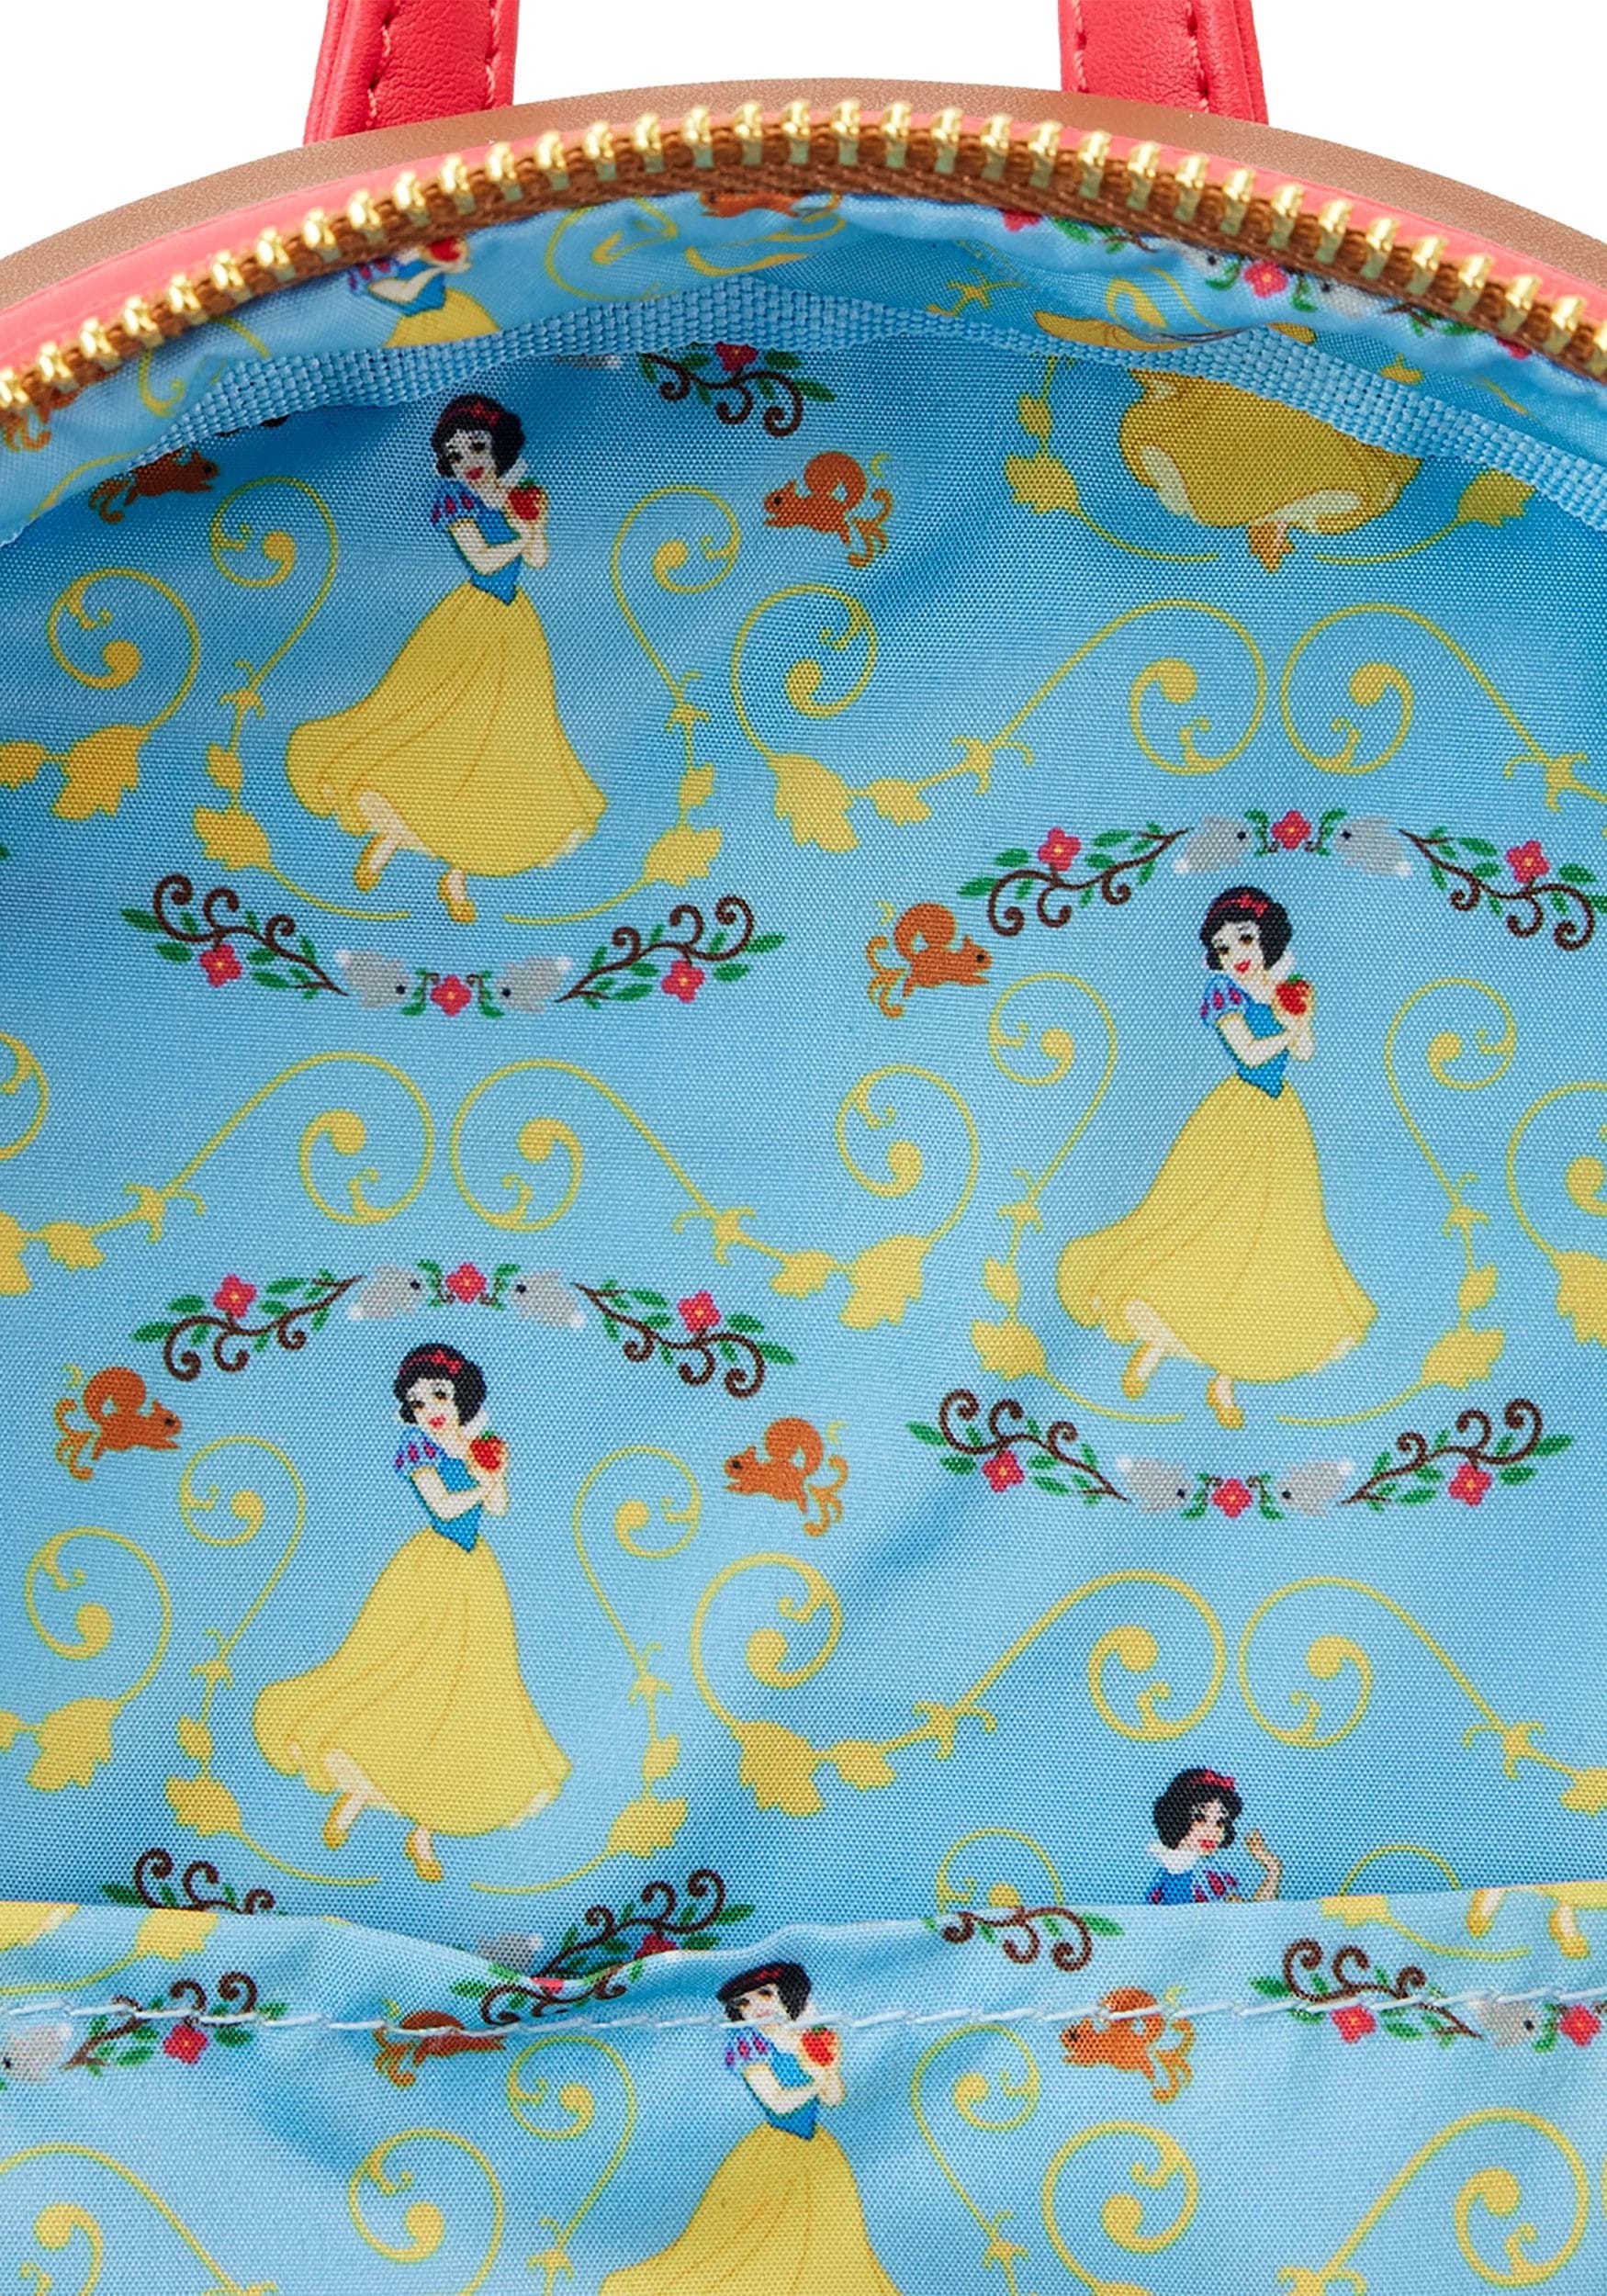 Buy Sleeping Beauty Princess Series Lenticular Mini Backpack at Loungefly.